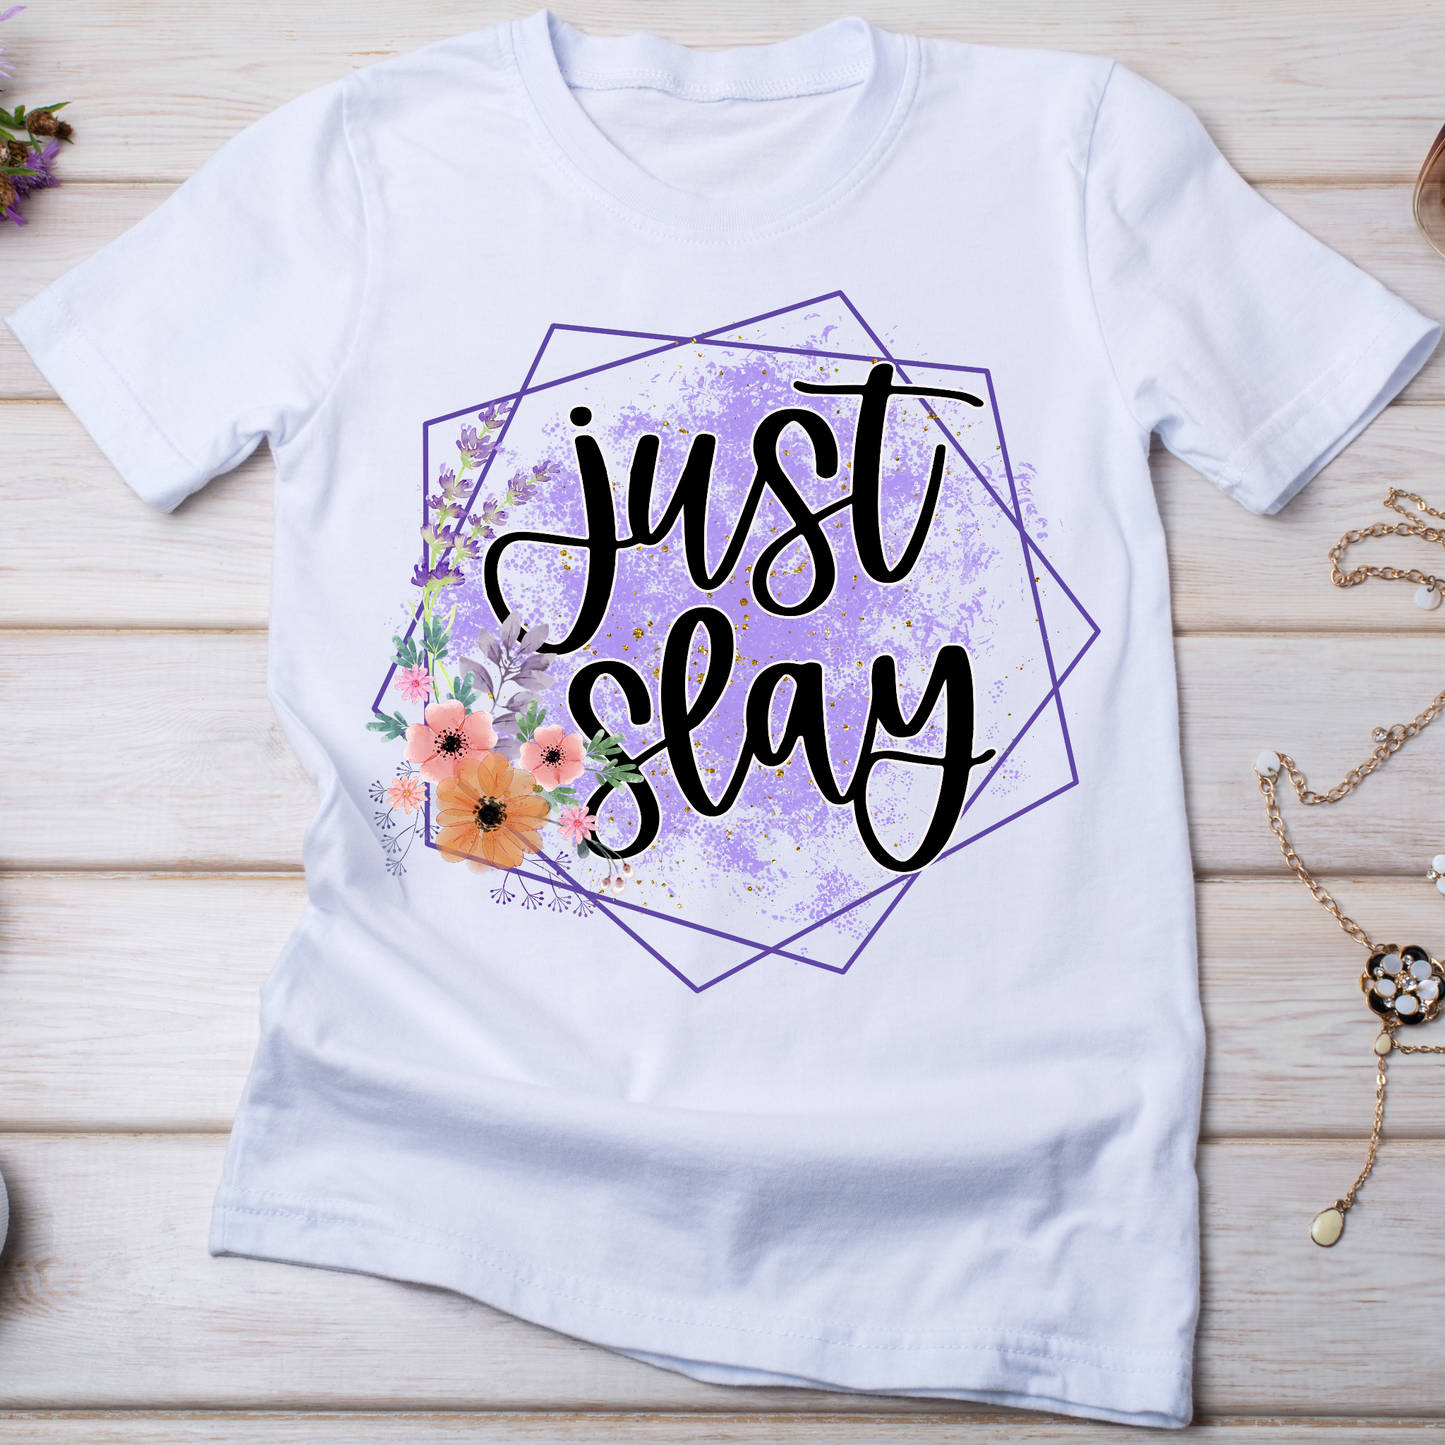 Just slay flower decor women's shirt - funny offensive t shirt - Premium t-shirt from Lees Krazy Teez - Just $19.95! Shop now at Lees Krazy Teez